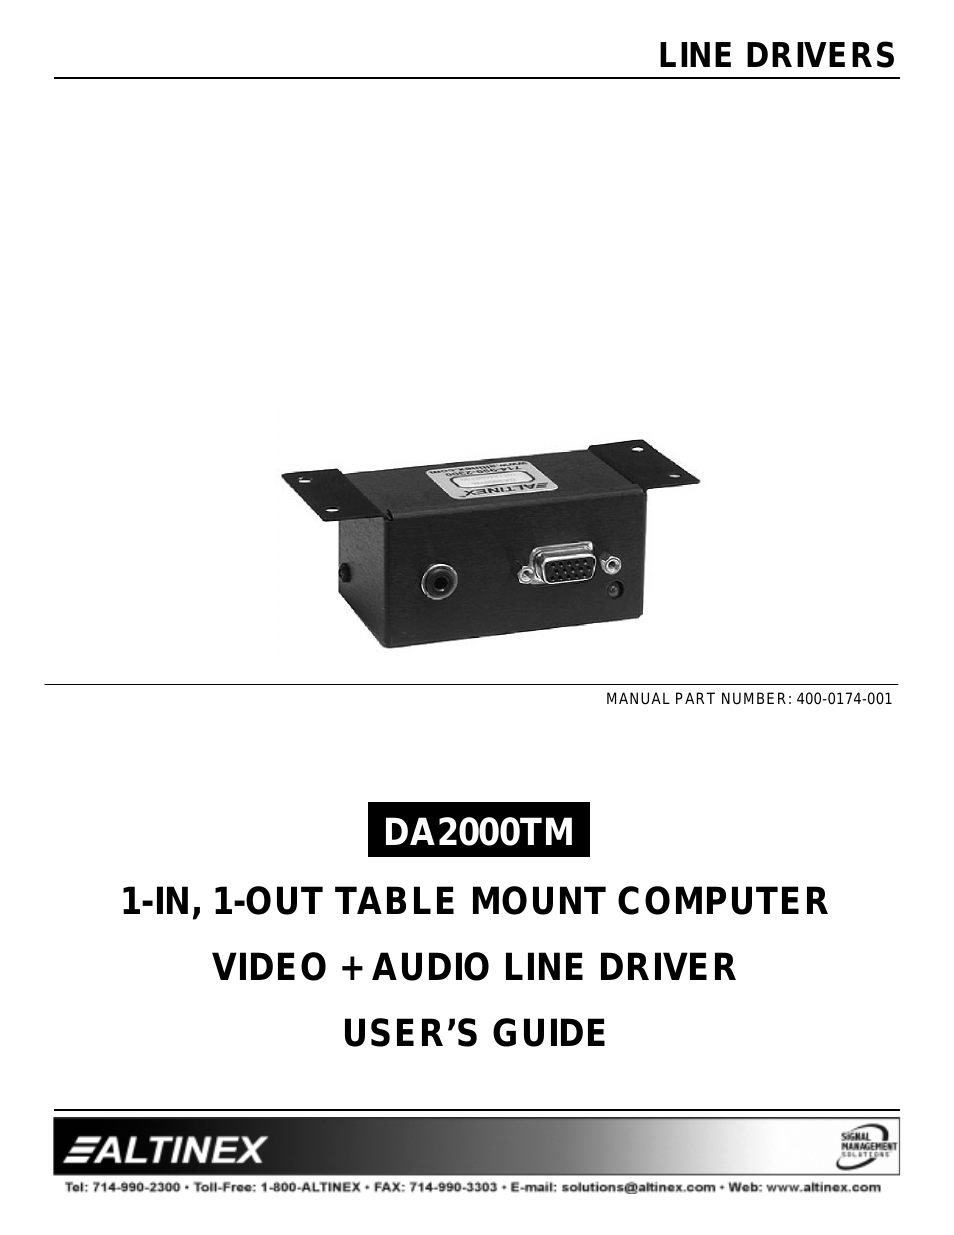 Table Mount Computer Video + Audio Line Driver DA2000TM